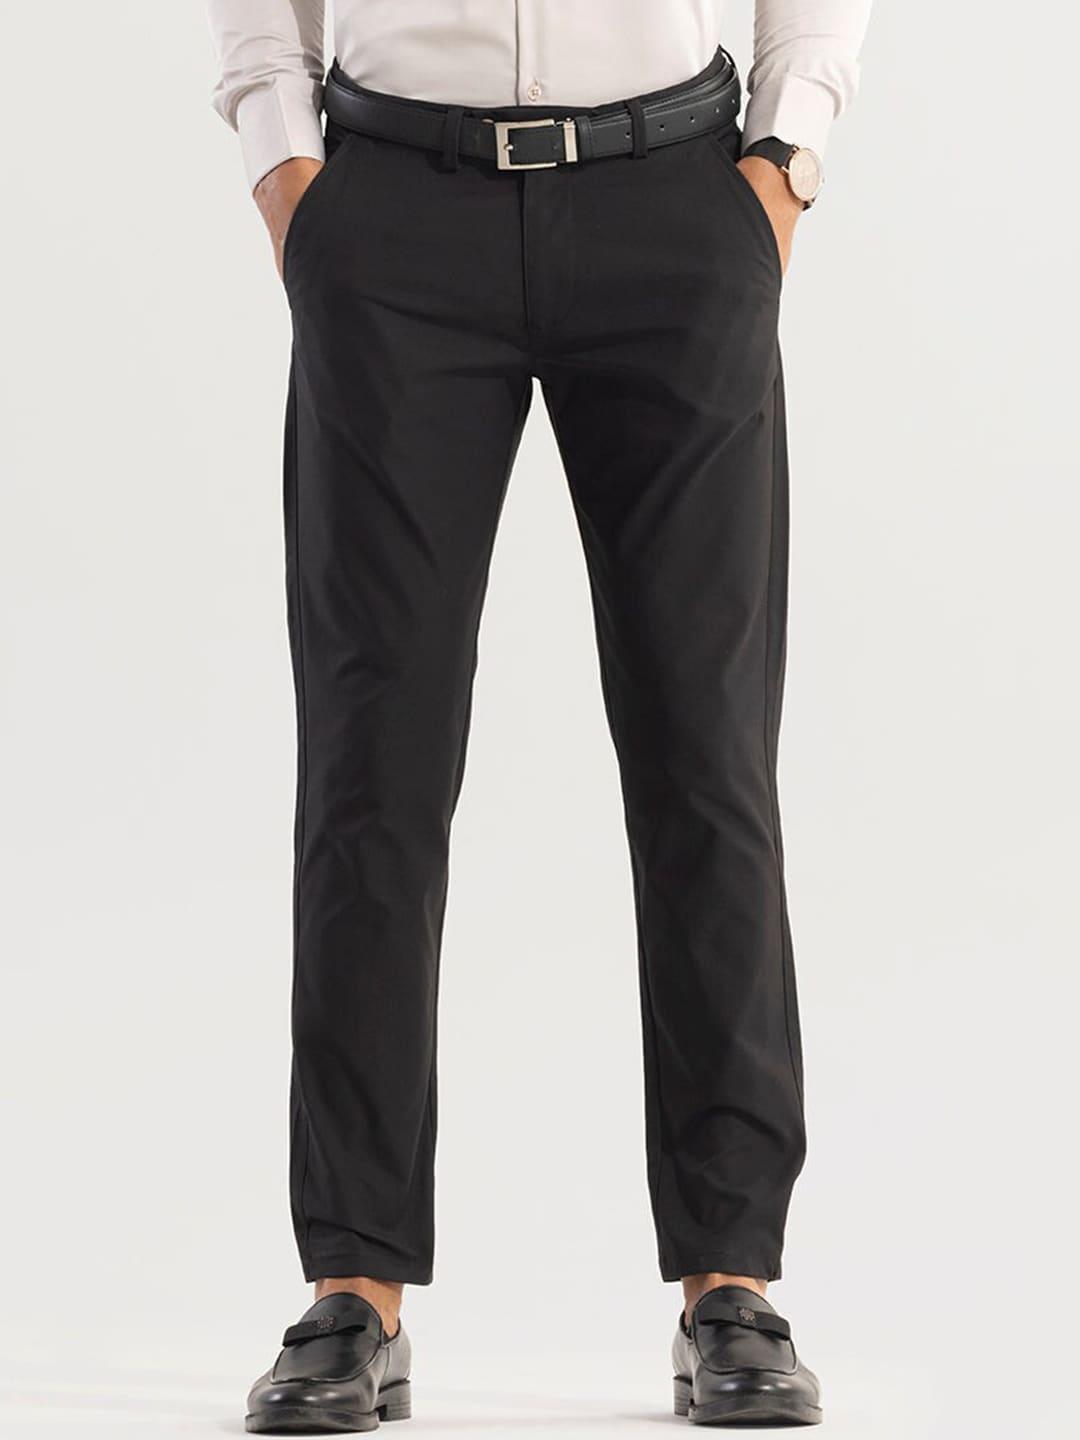 snitch-men-black-smart-slim-fit-cotton-chinos-trousers